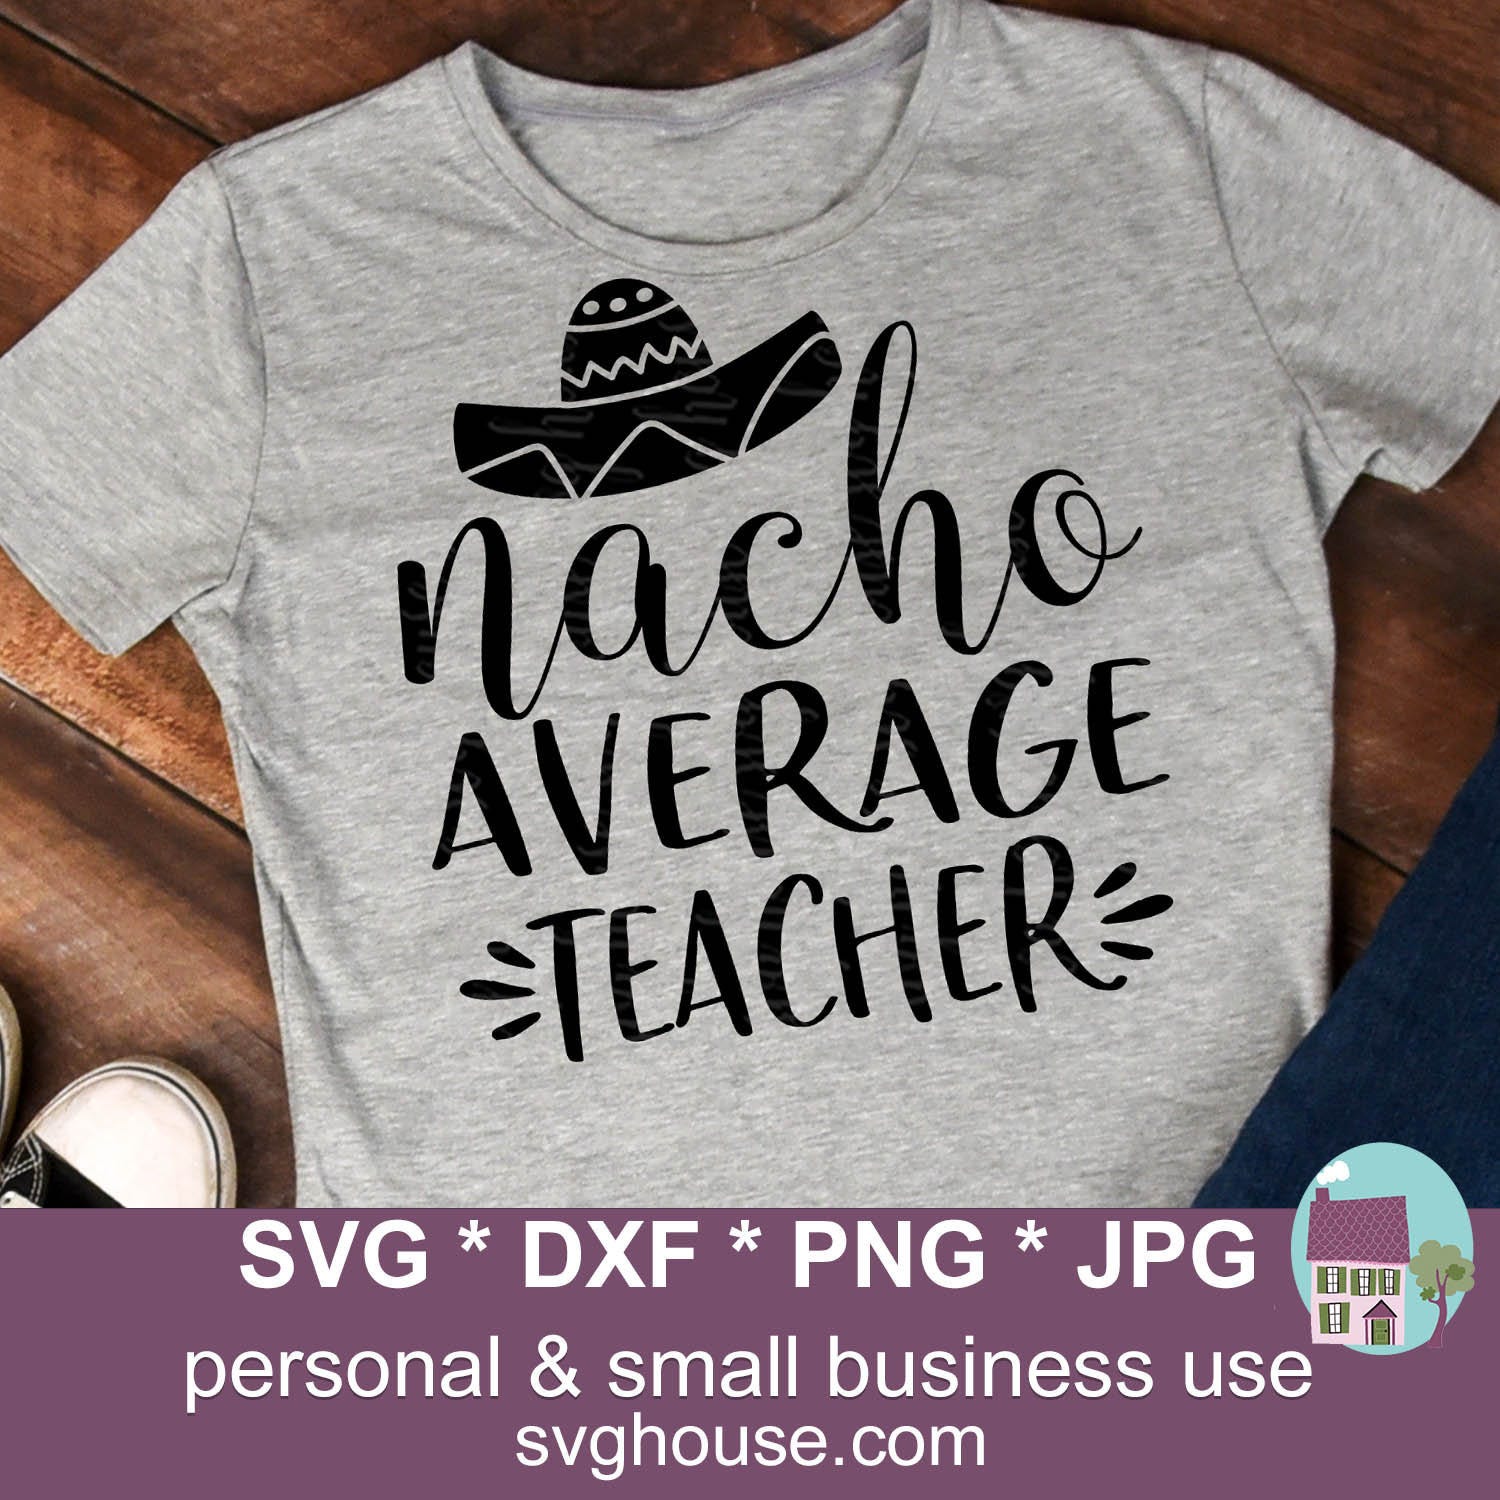 Nacho Average Teacher SVG Funny Cut Files For Cricut And Silhouette